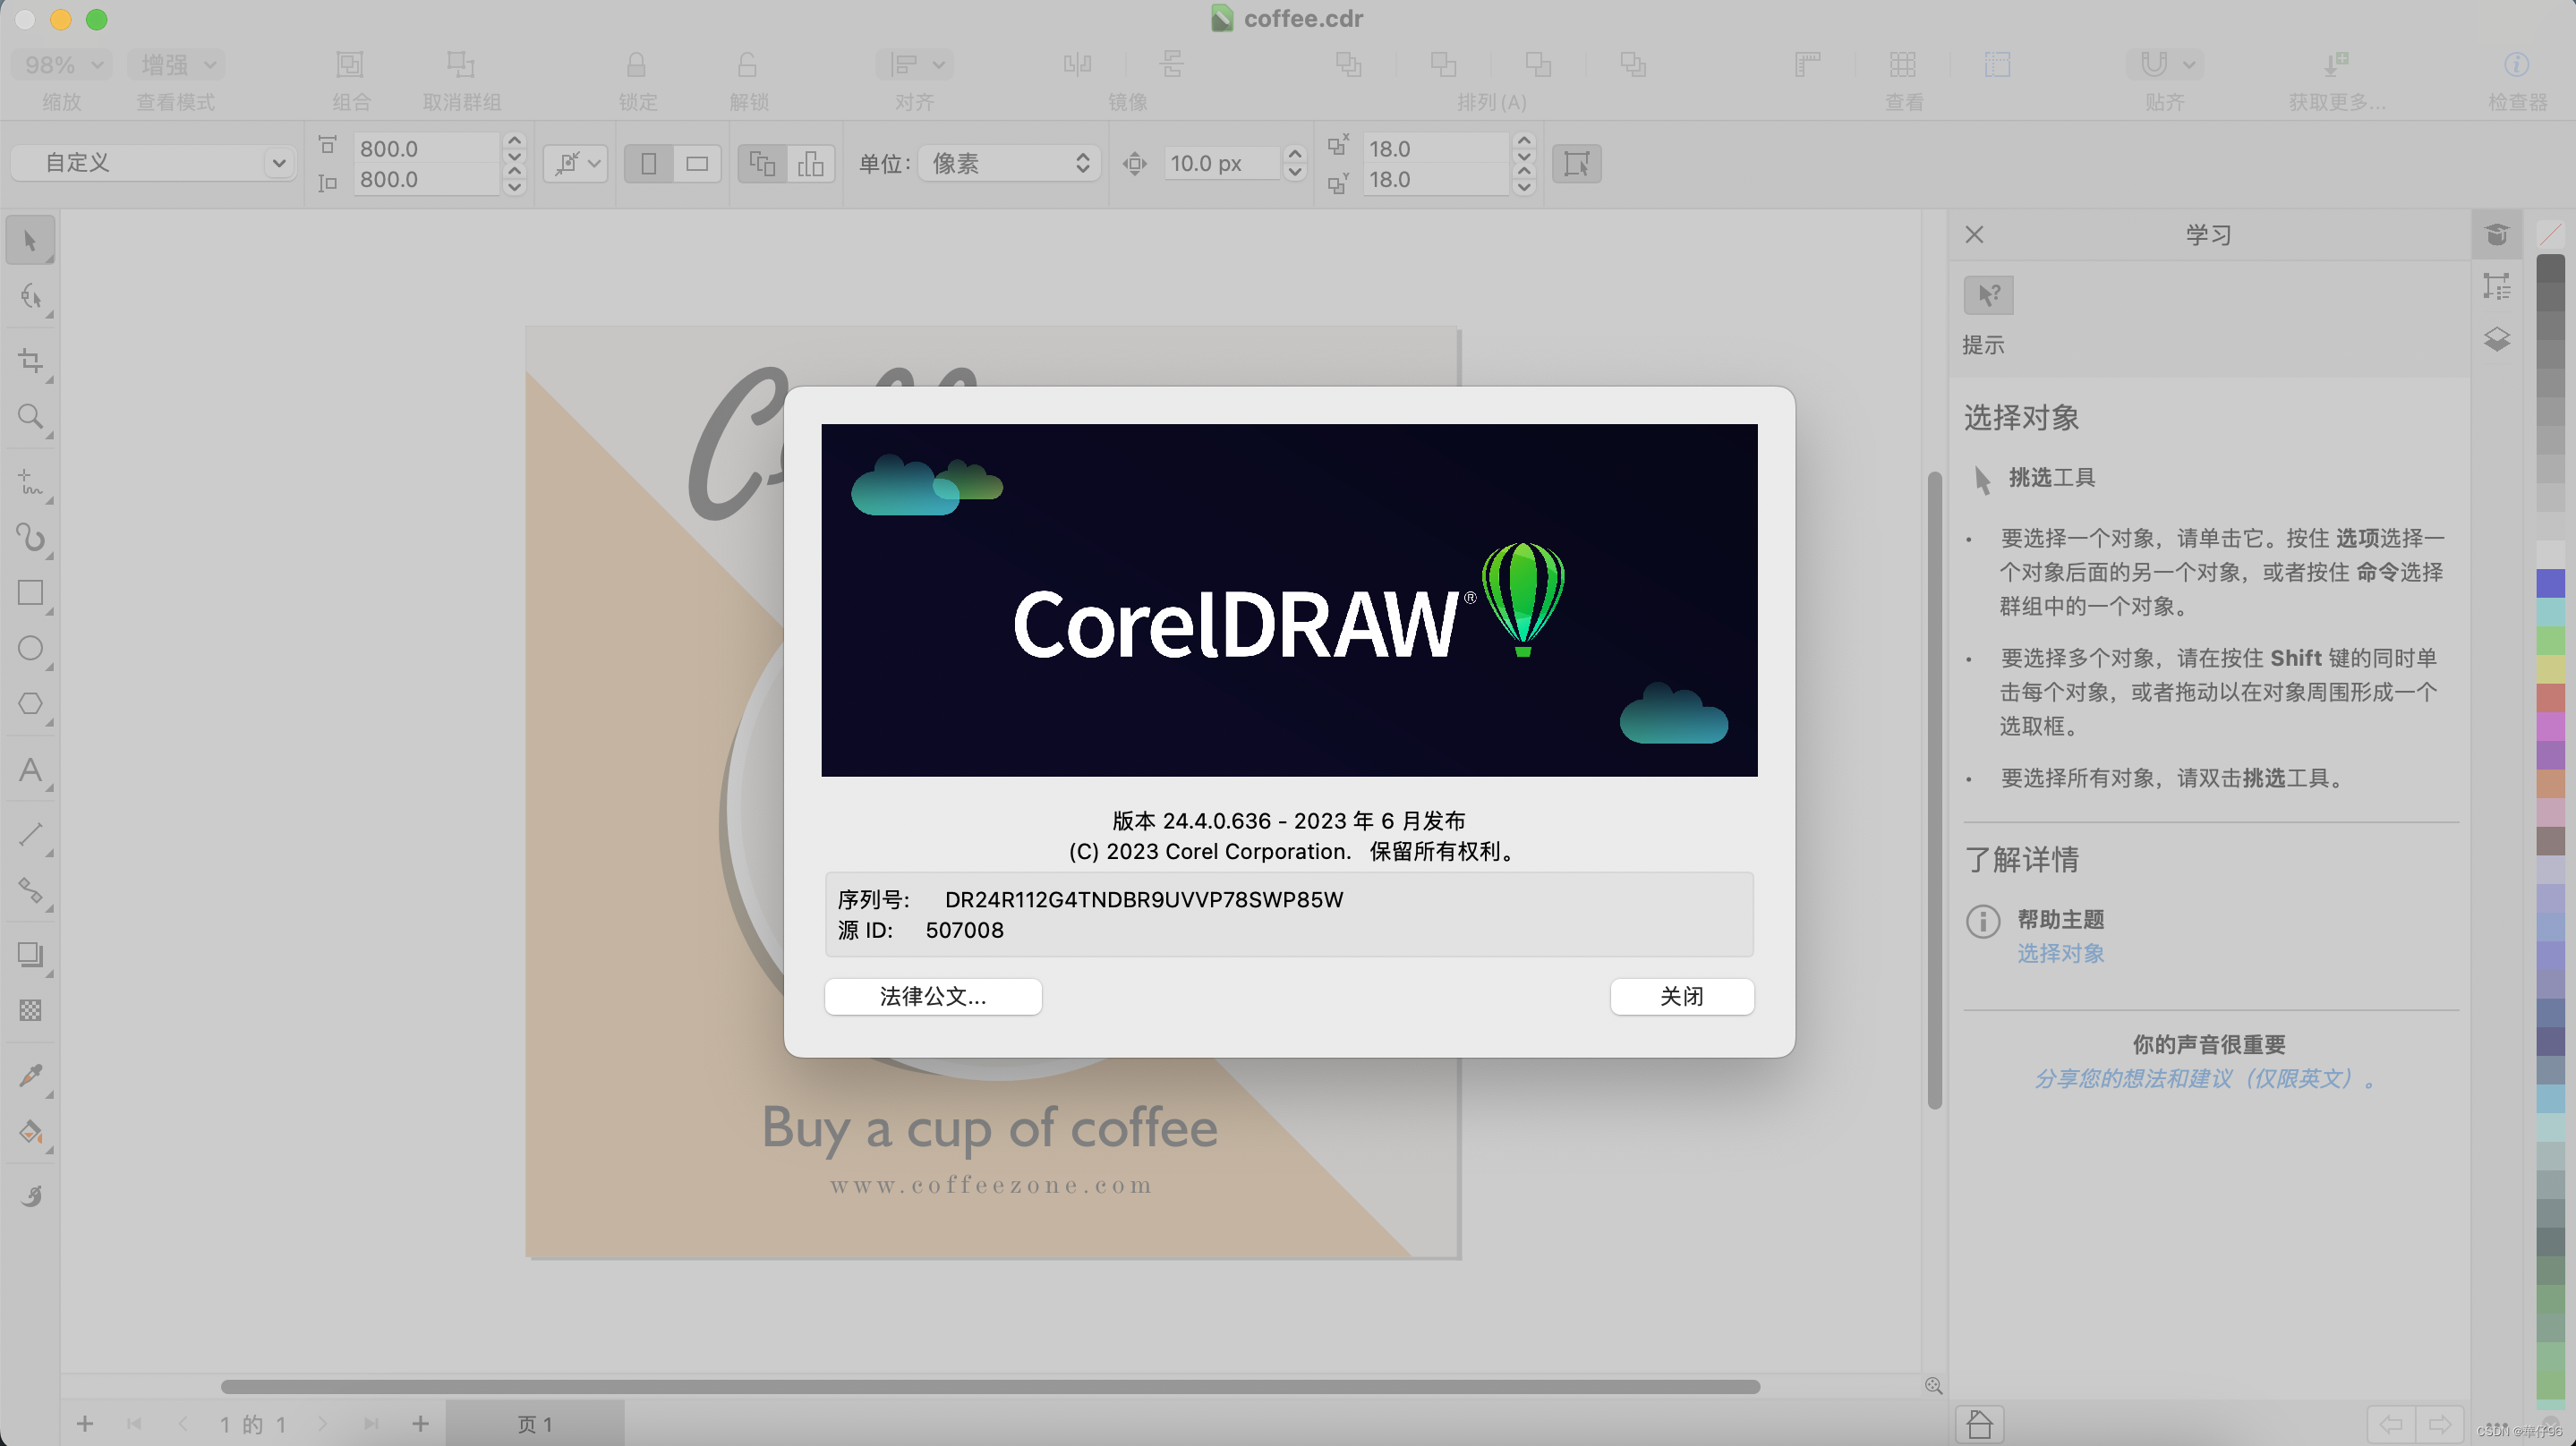 CorelDRAW苹果版提示请重新连接具有文件位置的设备...的解决方法